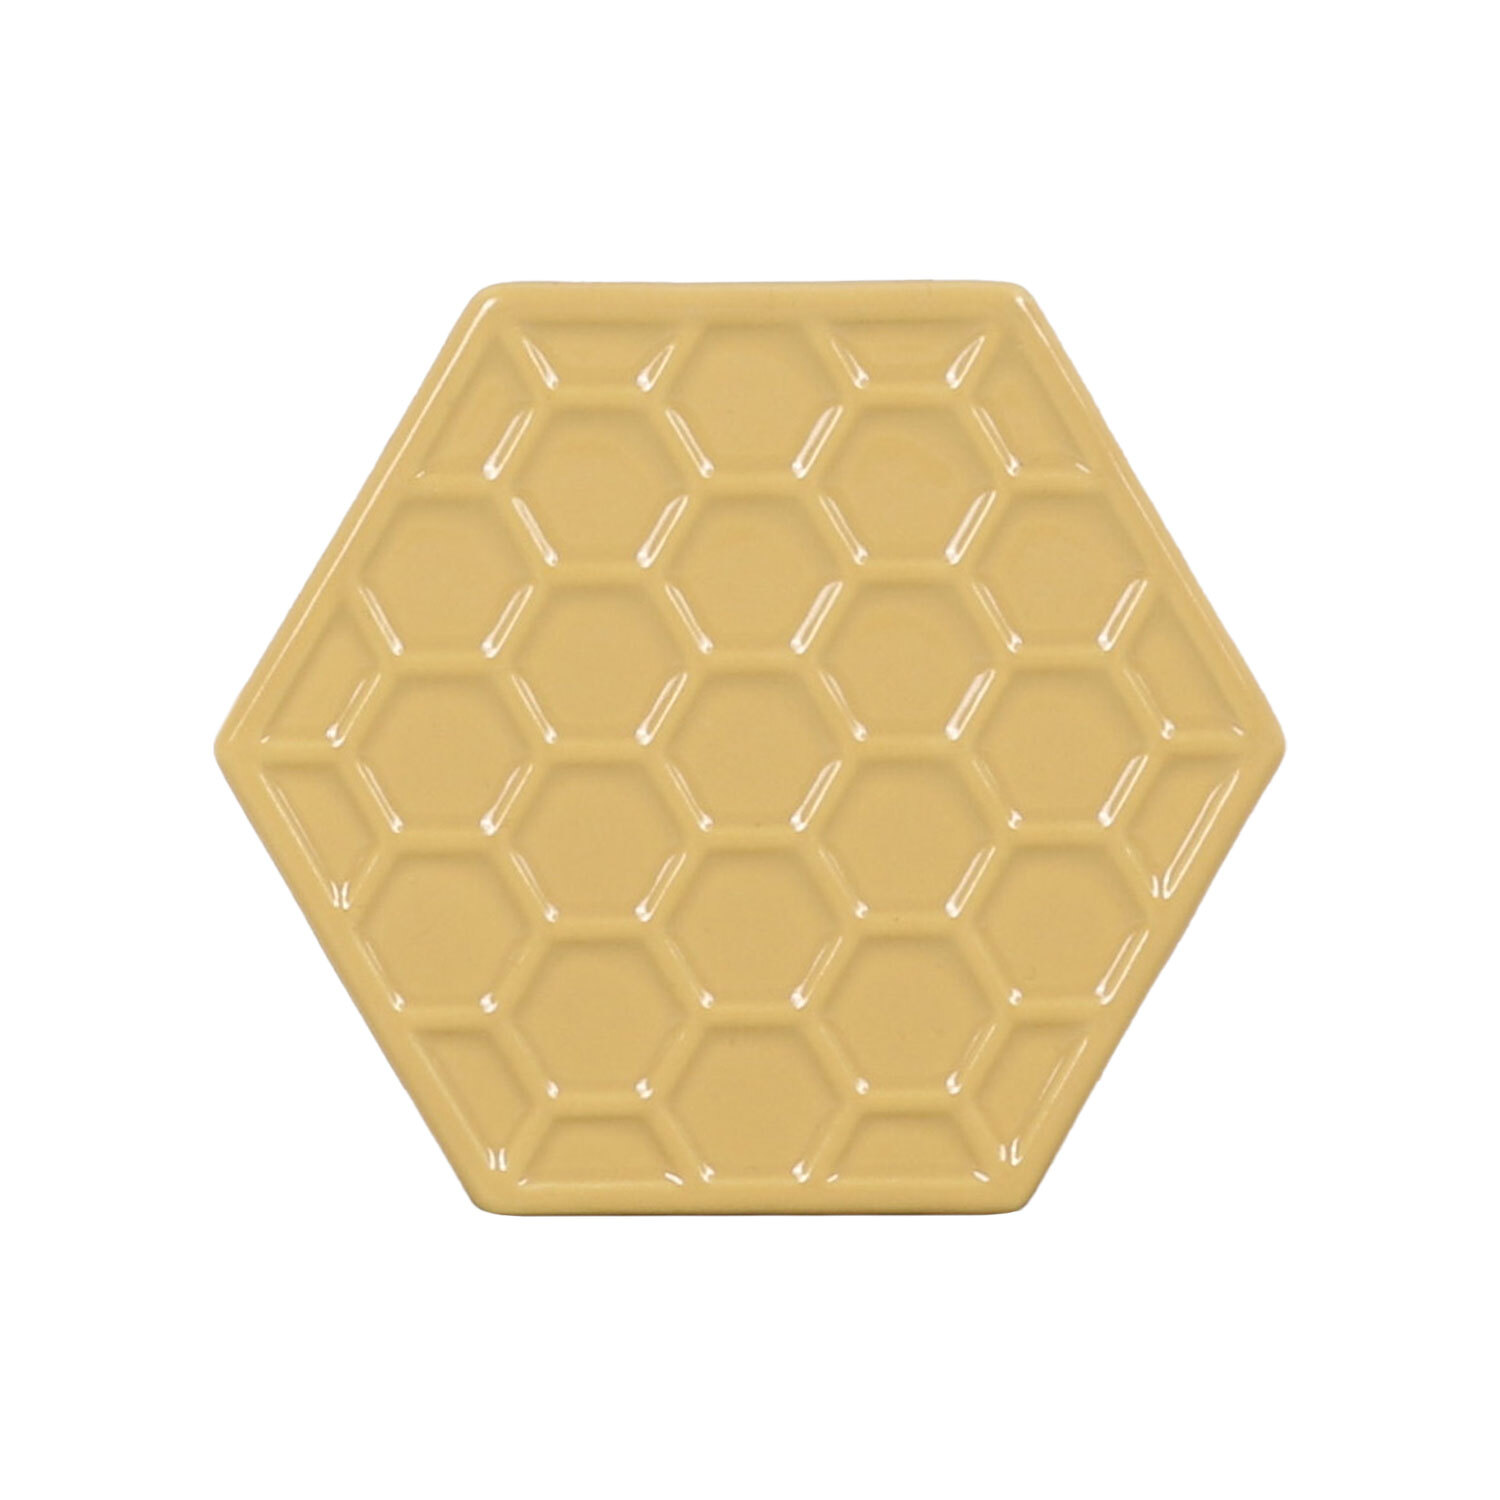 Honeycomb Hexagon Ceramic Coaster Image